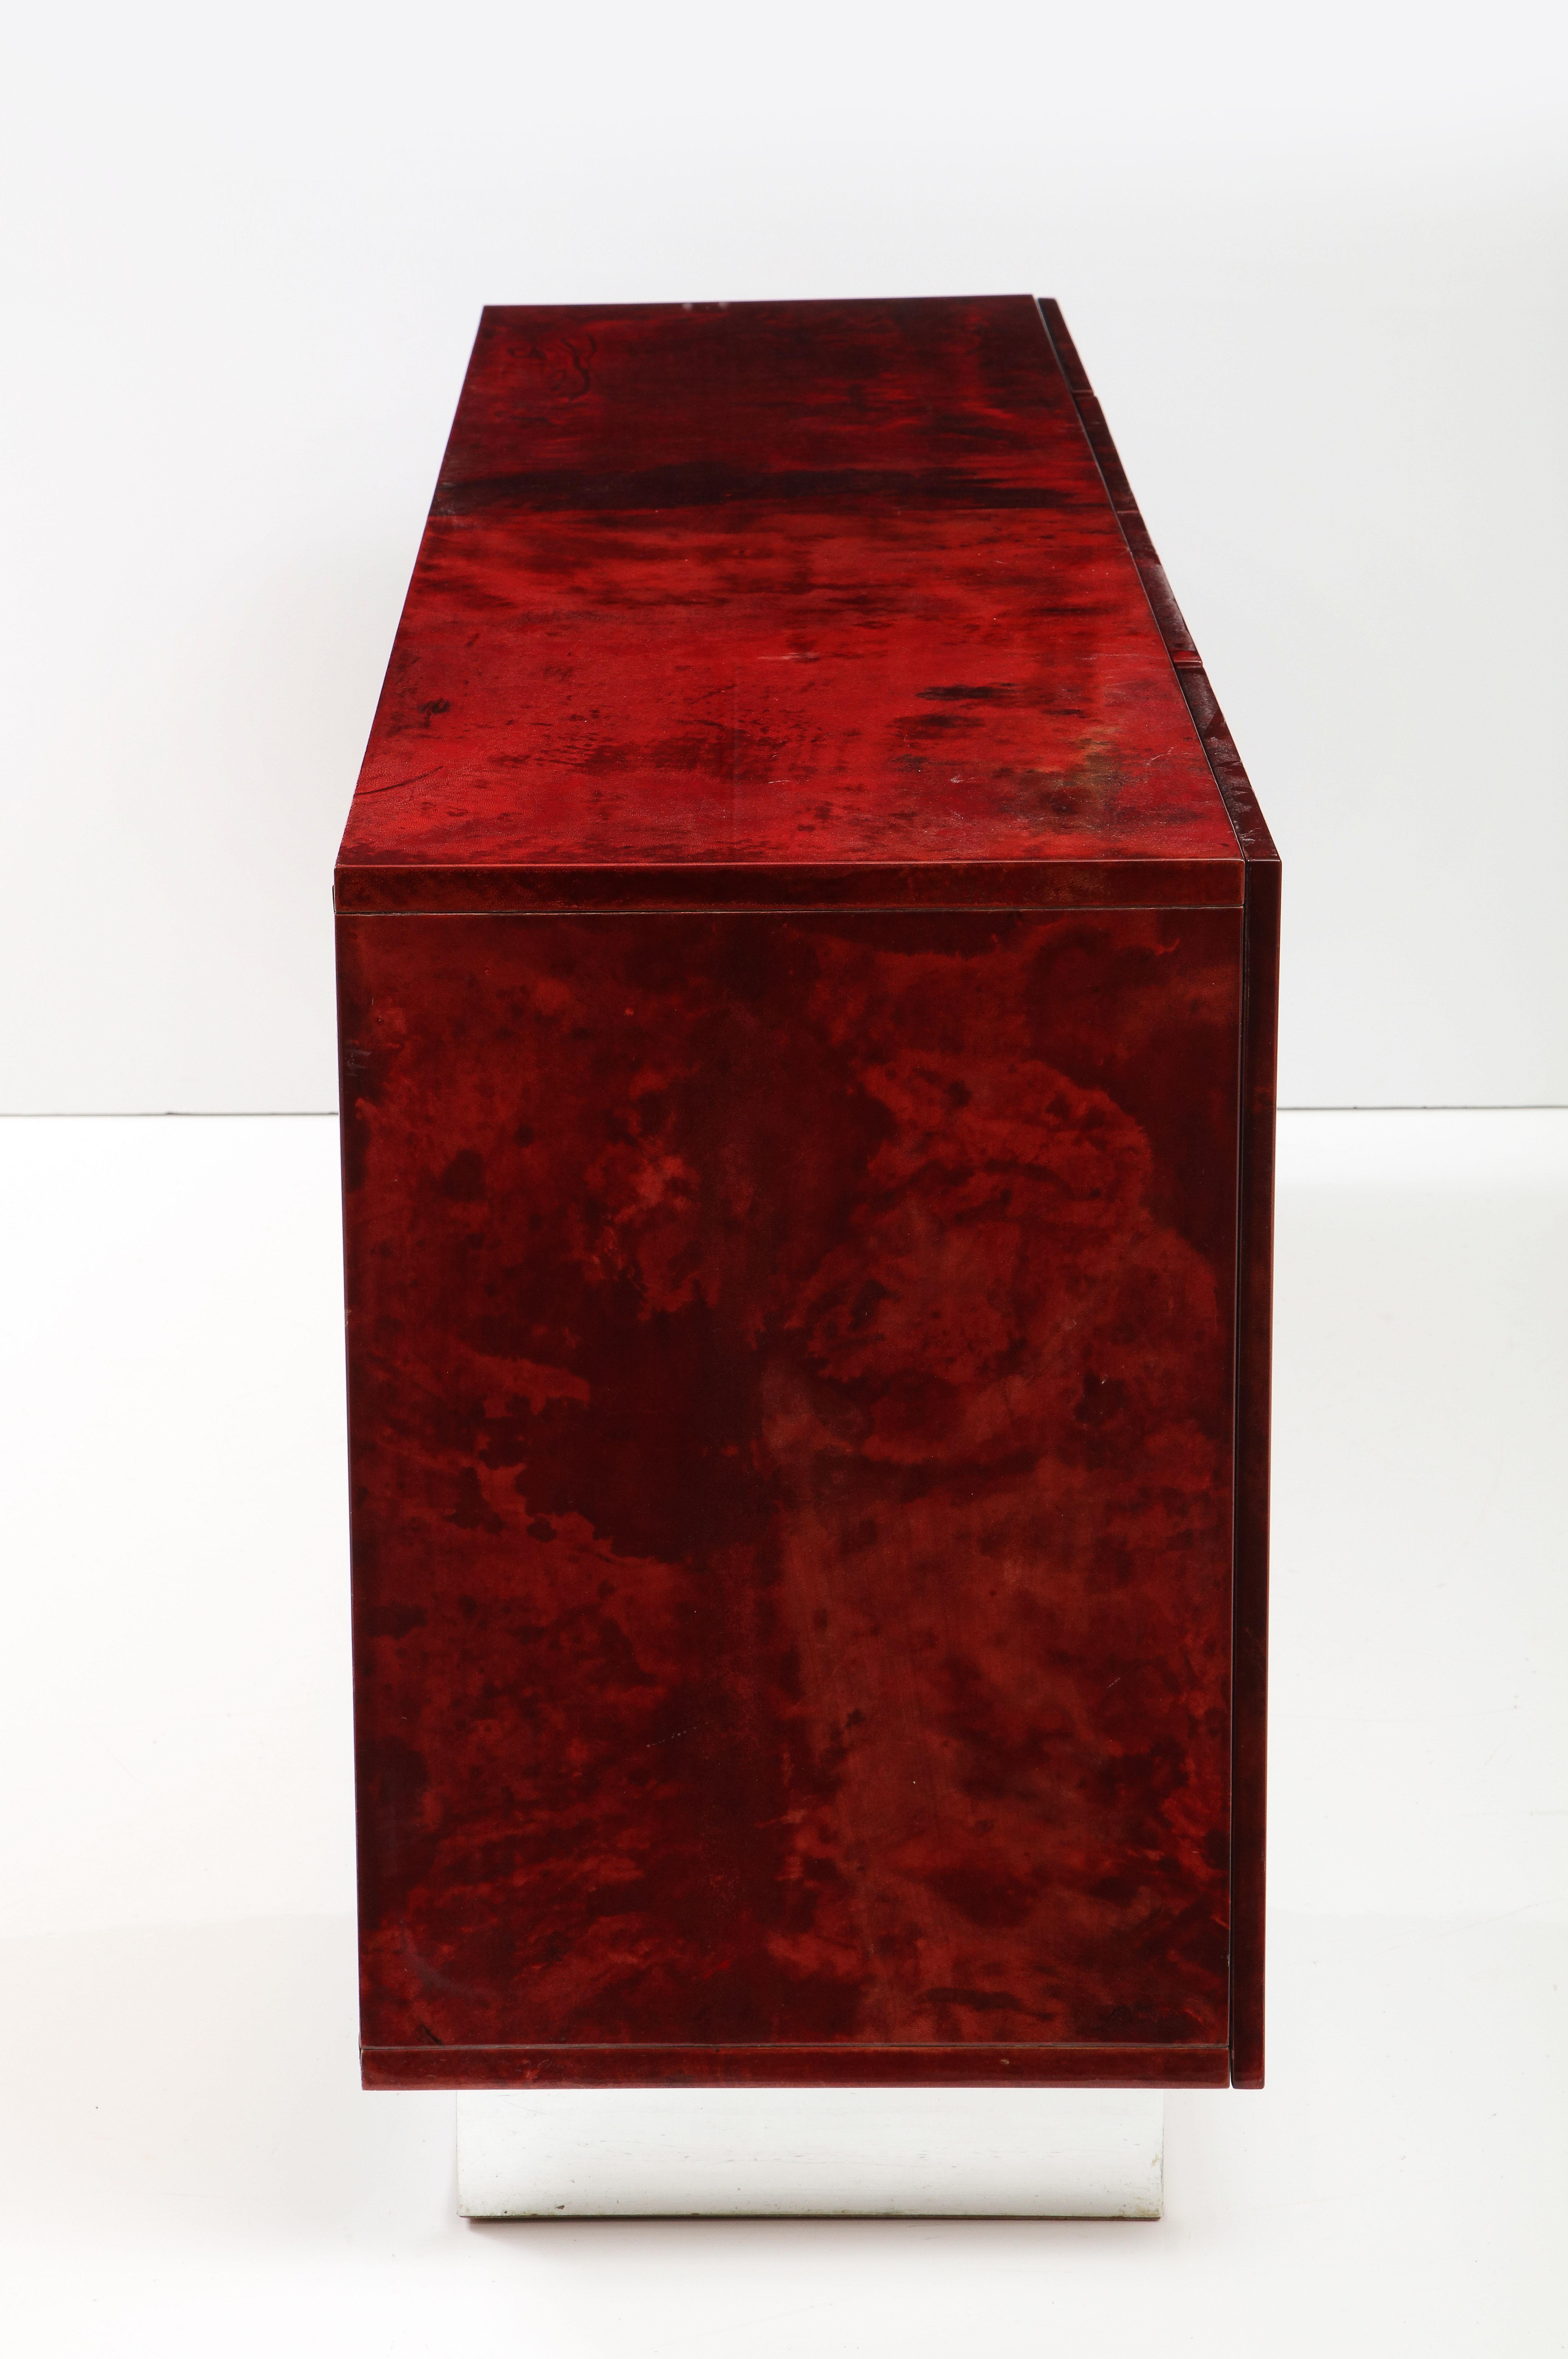 Aldo Tura Blood Red Goatskin Cabinet, Chrome Plinth Base, Italy, 1960 For Sale 7